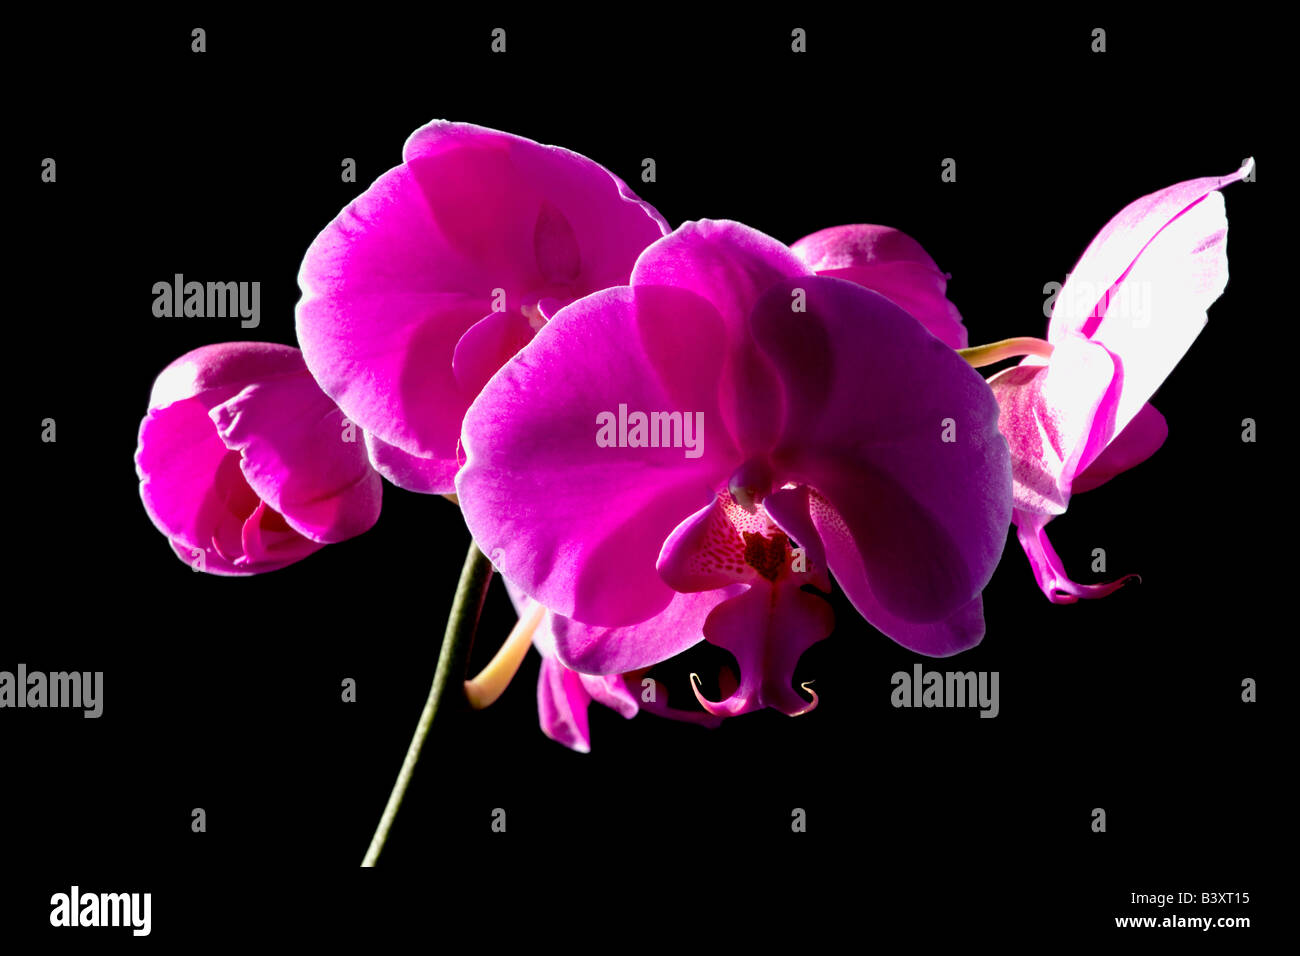 Purple flowers on black background Stock Photo